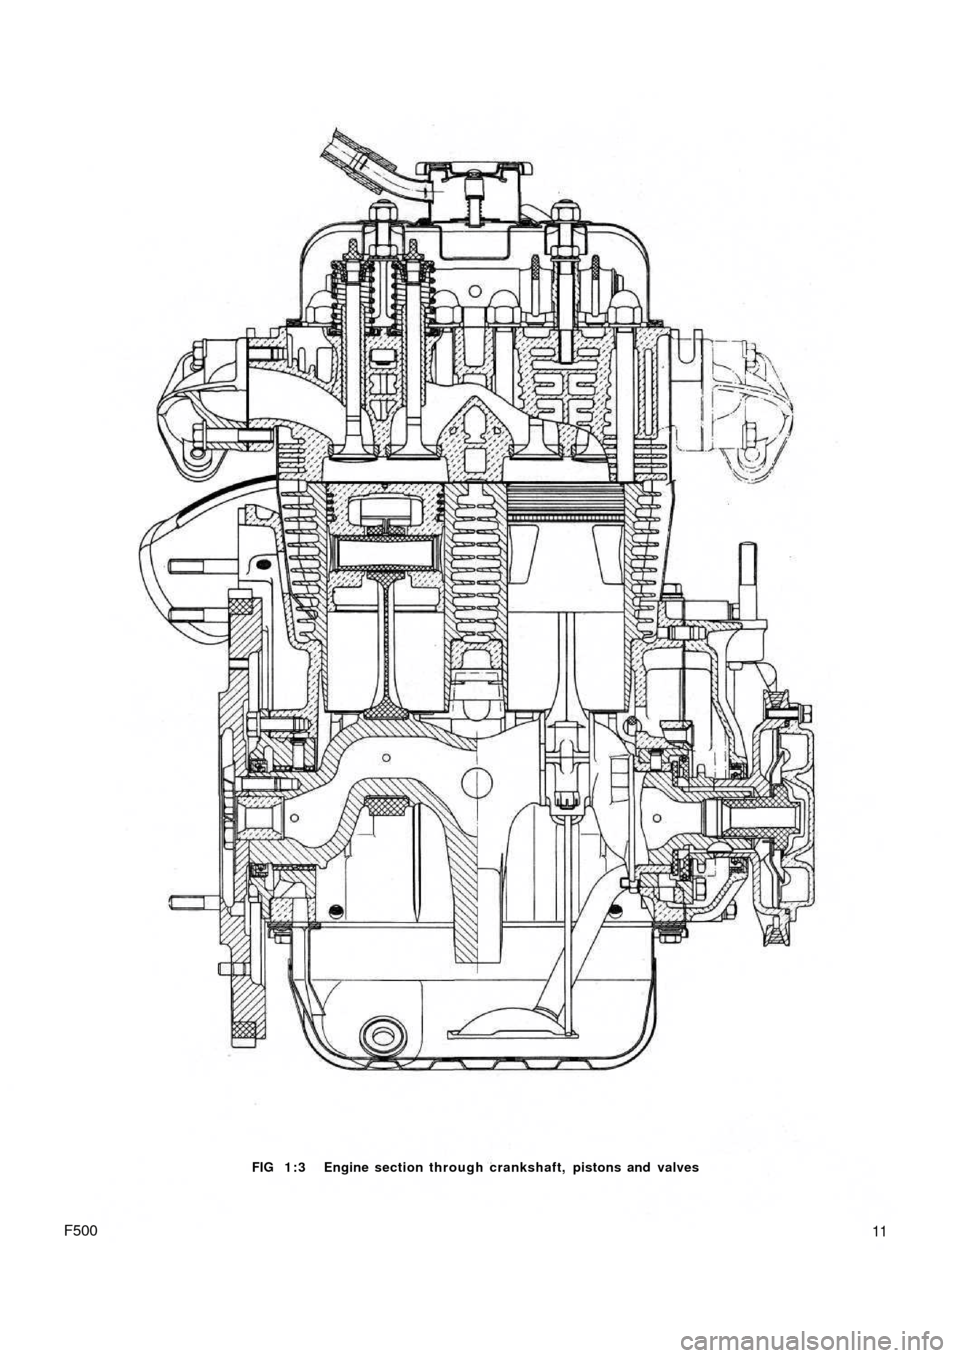 FIAT 500 1957 1.G Workshop Manual FIG 1 : 3  Engine section through crankshaft, pistons and  valves
F50011 